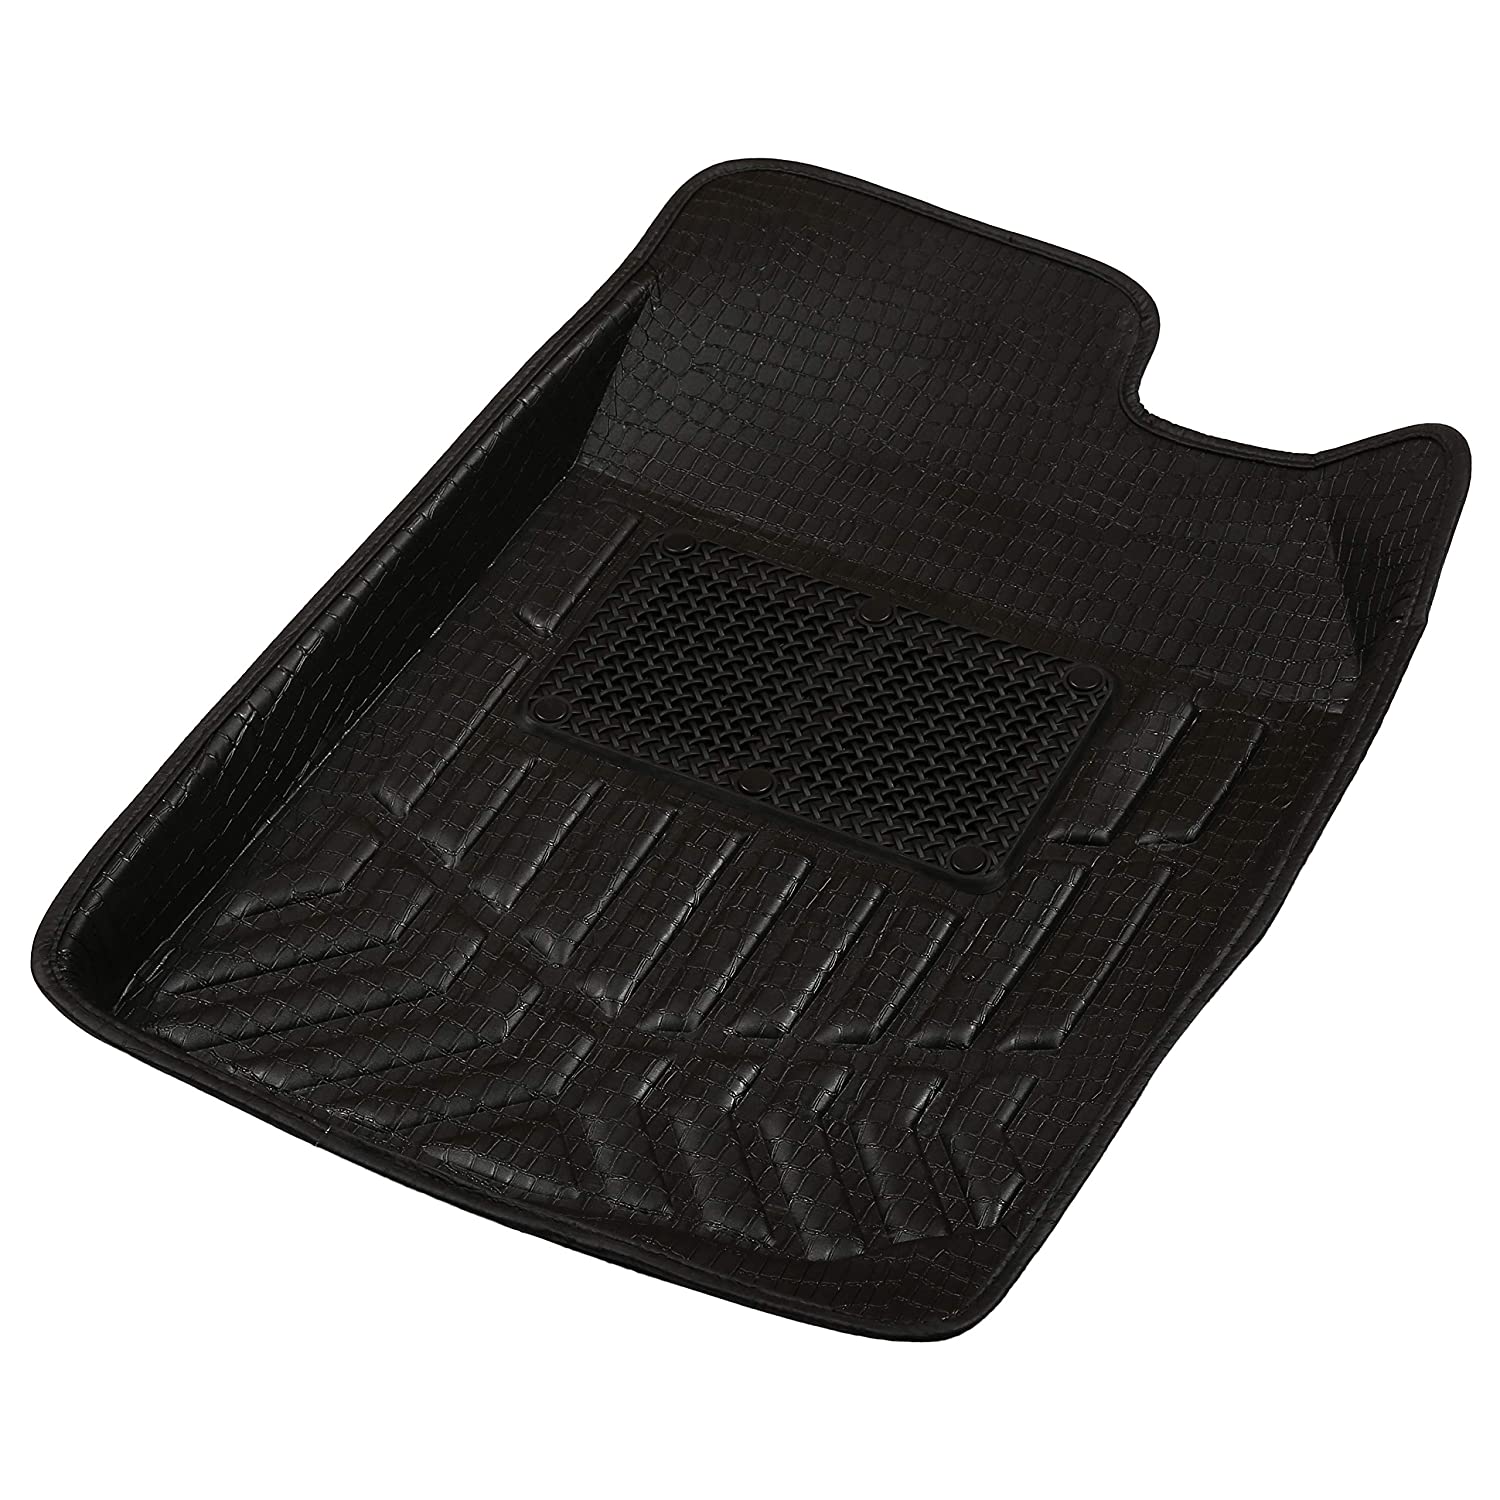 Drivn 3D Customised Car Floor Mat for Mahindra Scorpio - Black (Set of 3)